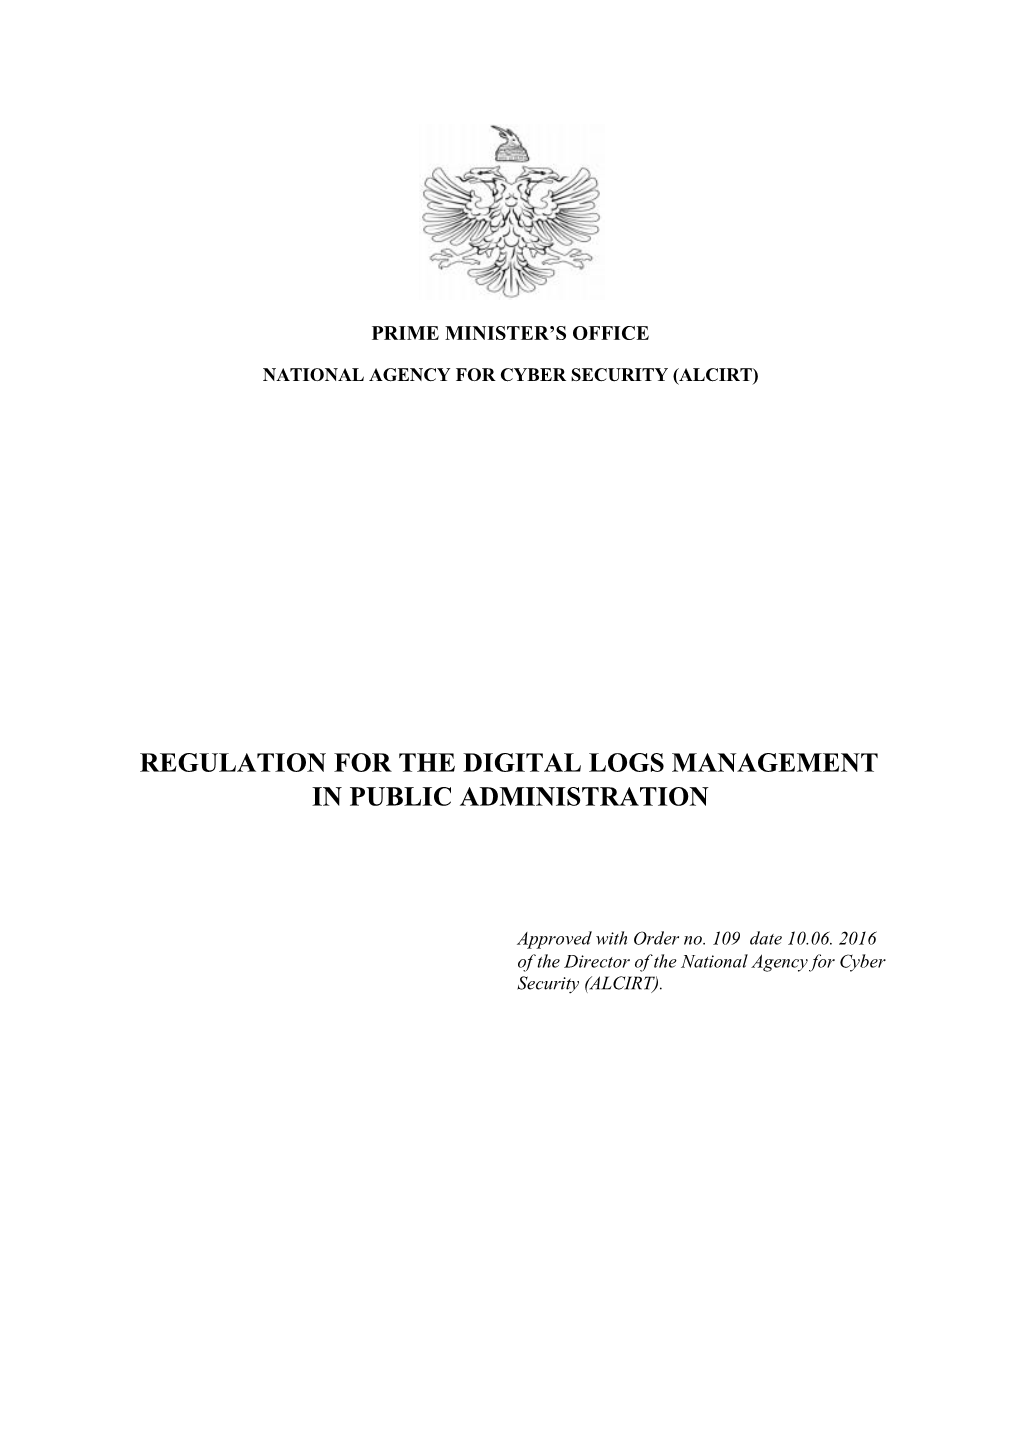 Regulation for the Digital Logs Management in Public Administration